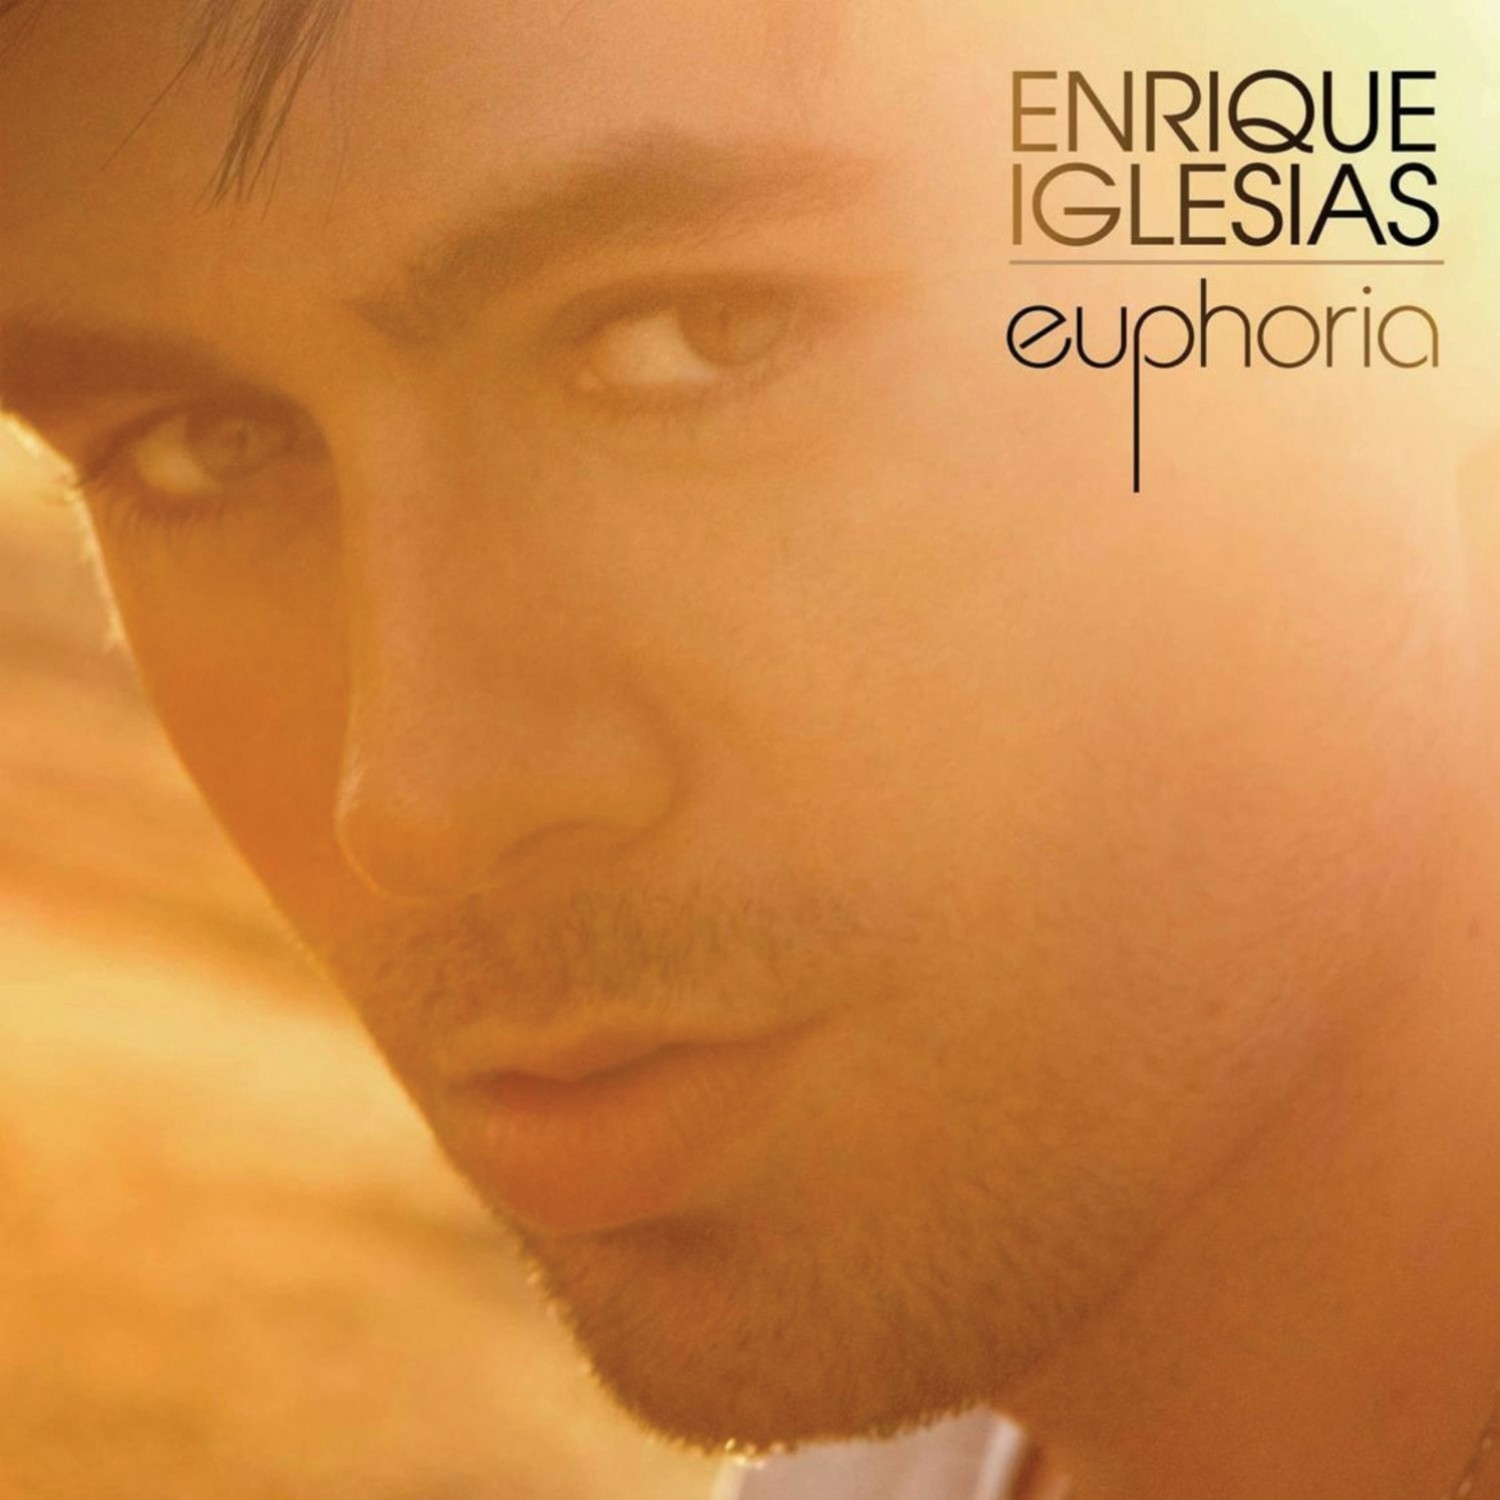 http://1.bp.blogspot.com/_ZlRVNfBwd7s/TRcl7xisB0I/AAAAAAAAATQ/pG7Qf3s7INM/s1600/Enrique+Iglesiass+-+Euphoria+free+download.jpg